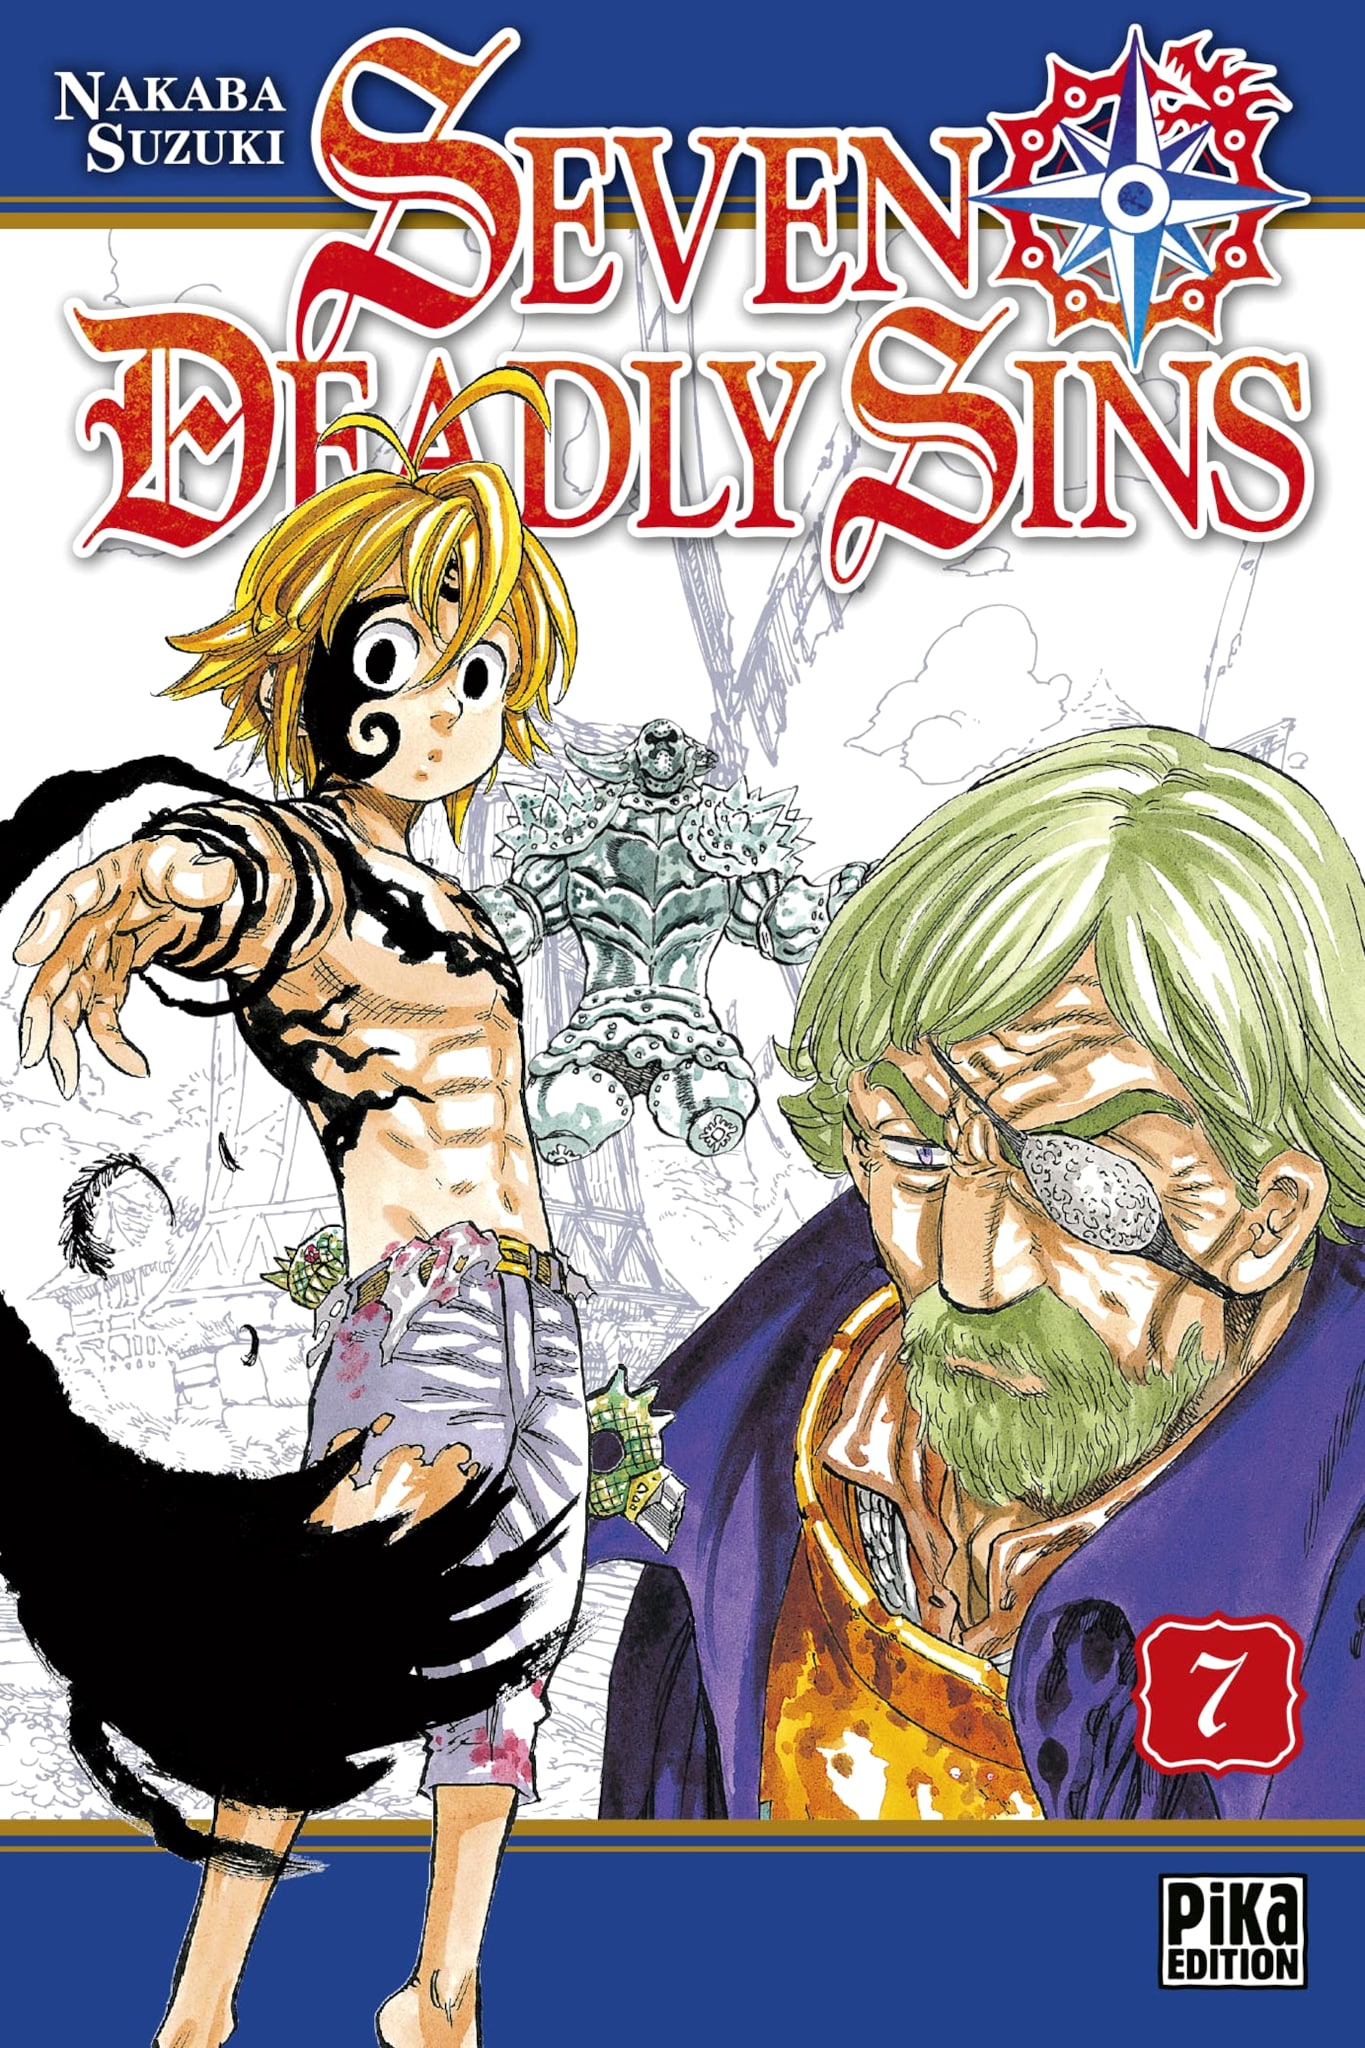 Tome 7 du manga The Seven Deadly Sins